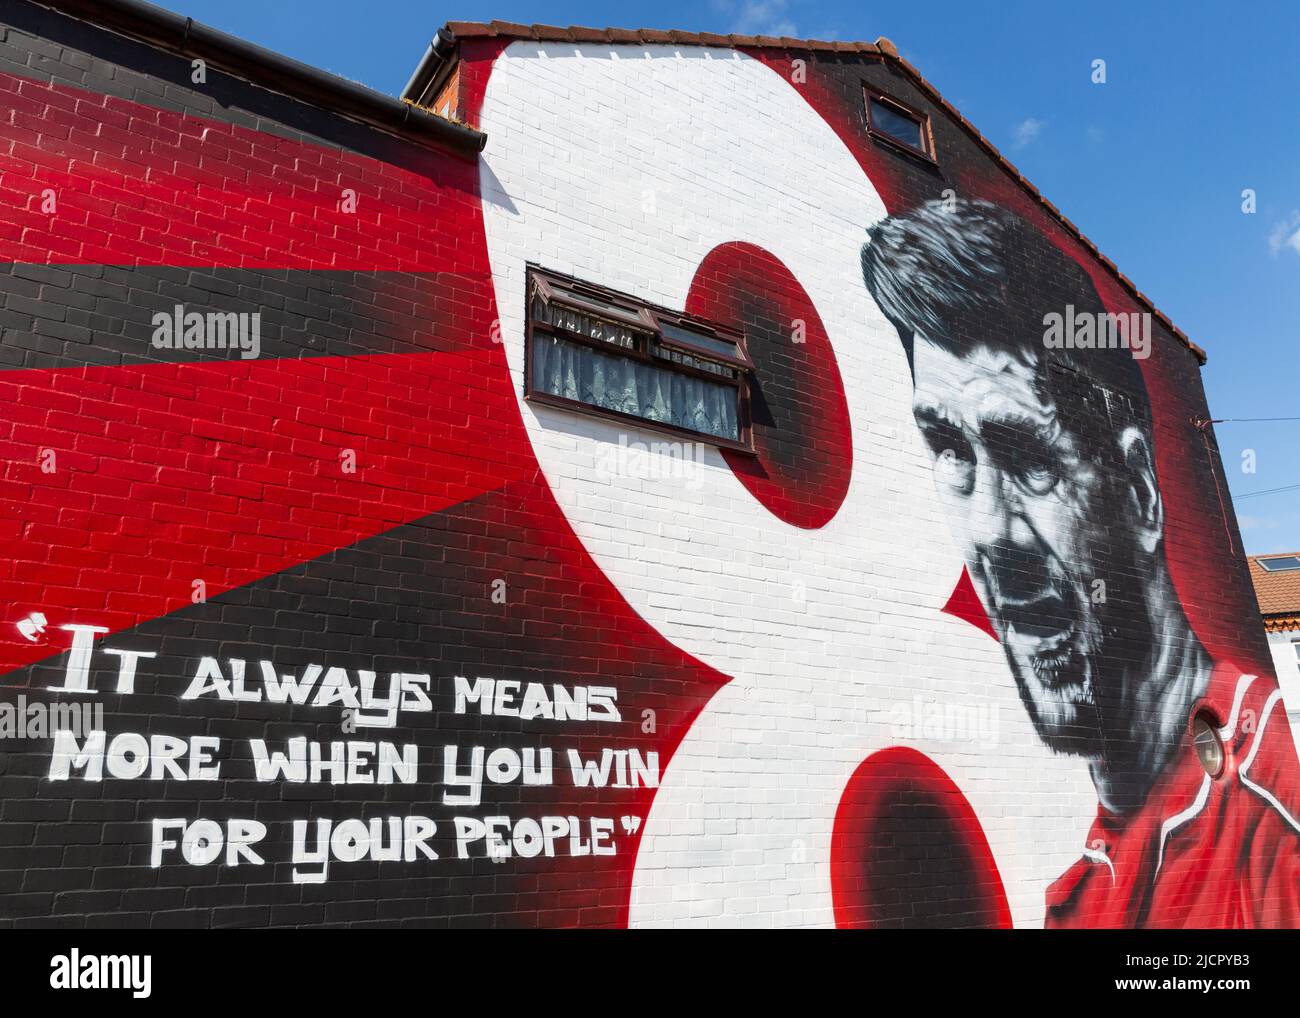 Steven Gerrard mural painted on house wall, Liverpool FC street art, Anfield, Liverpool, England, UK Stock Photo